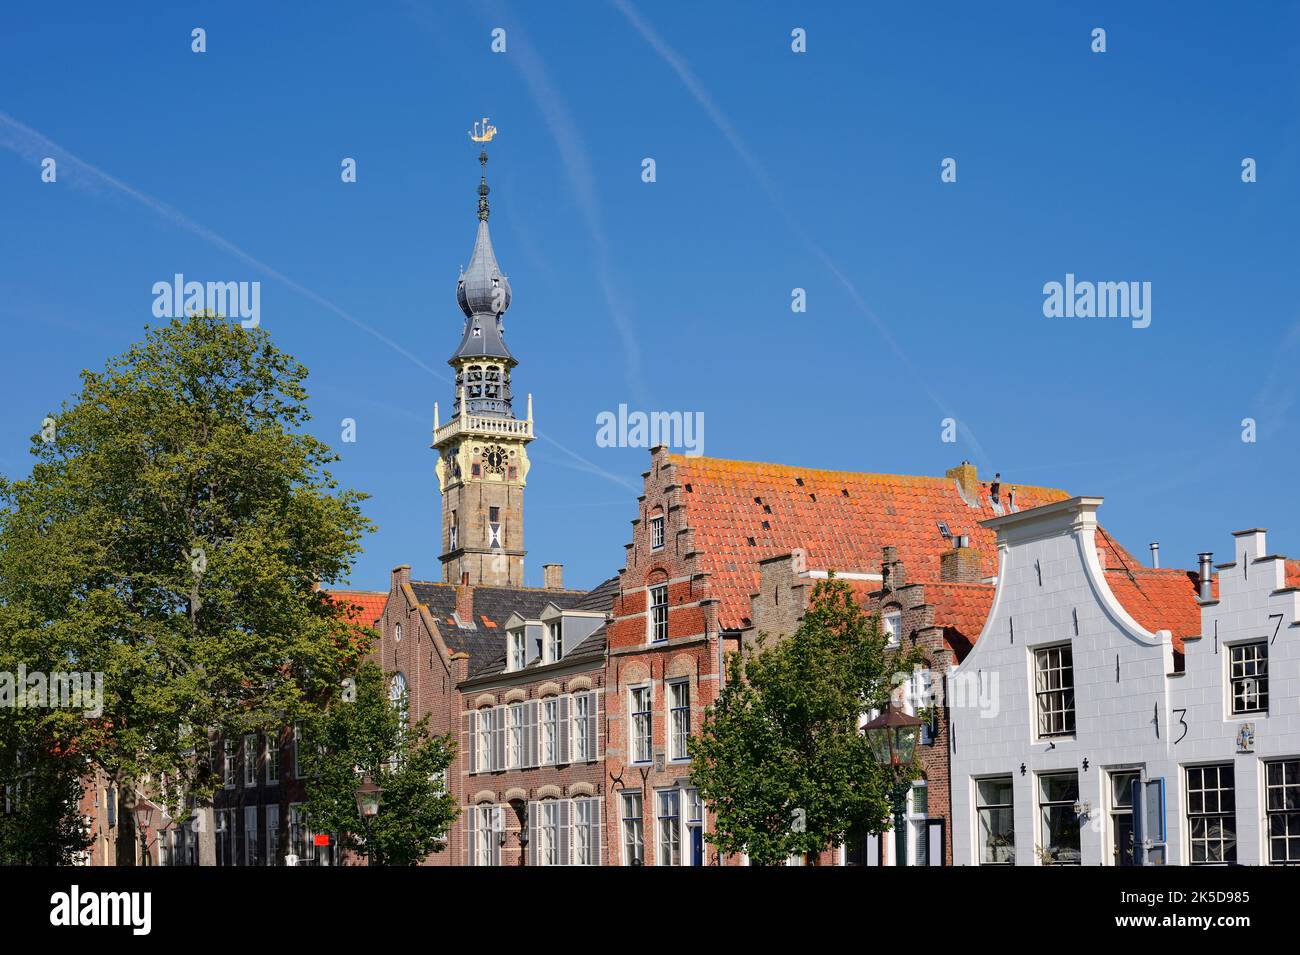 Town hall tower and houses, Veere, Walcheren, Zeeland, Netherlands Stock Photo